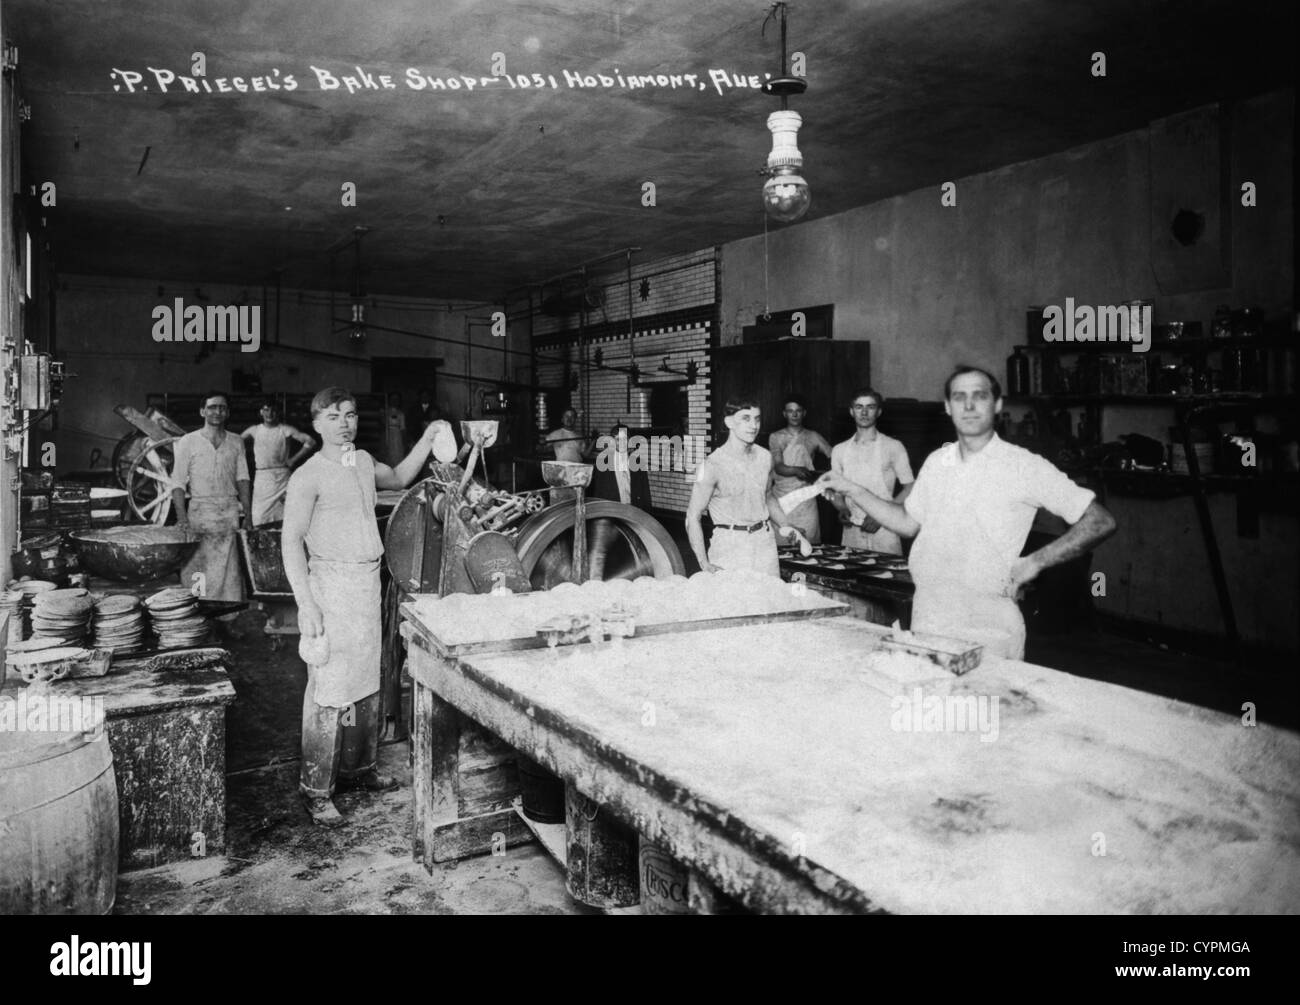 Bakery Workers, P. Priegel's Bake Shop, St. Louis Missouri, USA, 1915 Stock Photo